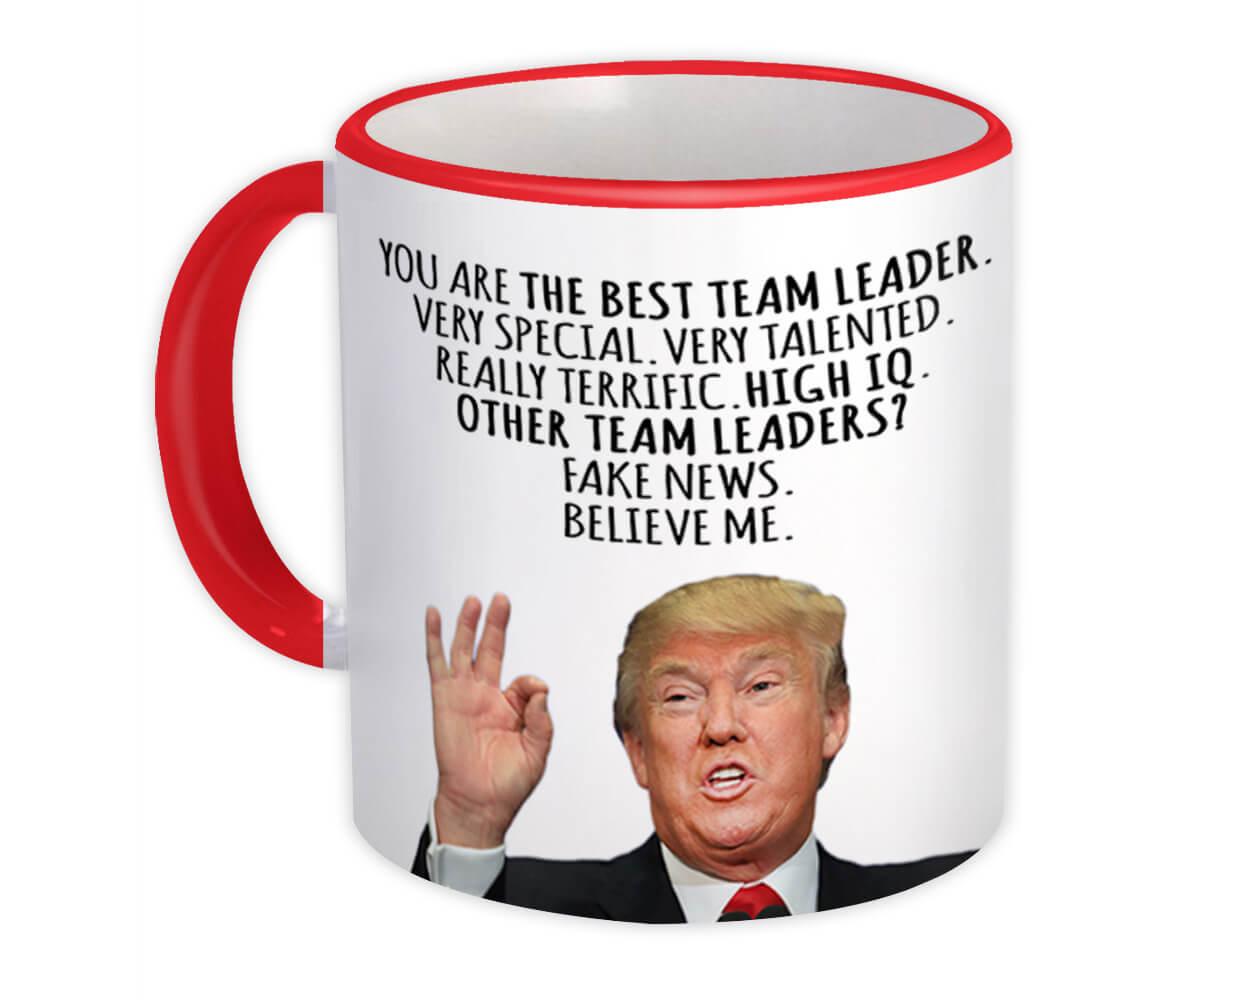 Trump's team says they raised over $11.5 million since his mug